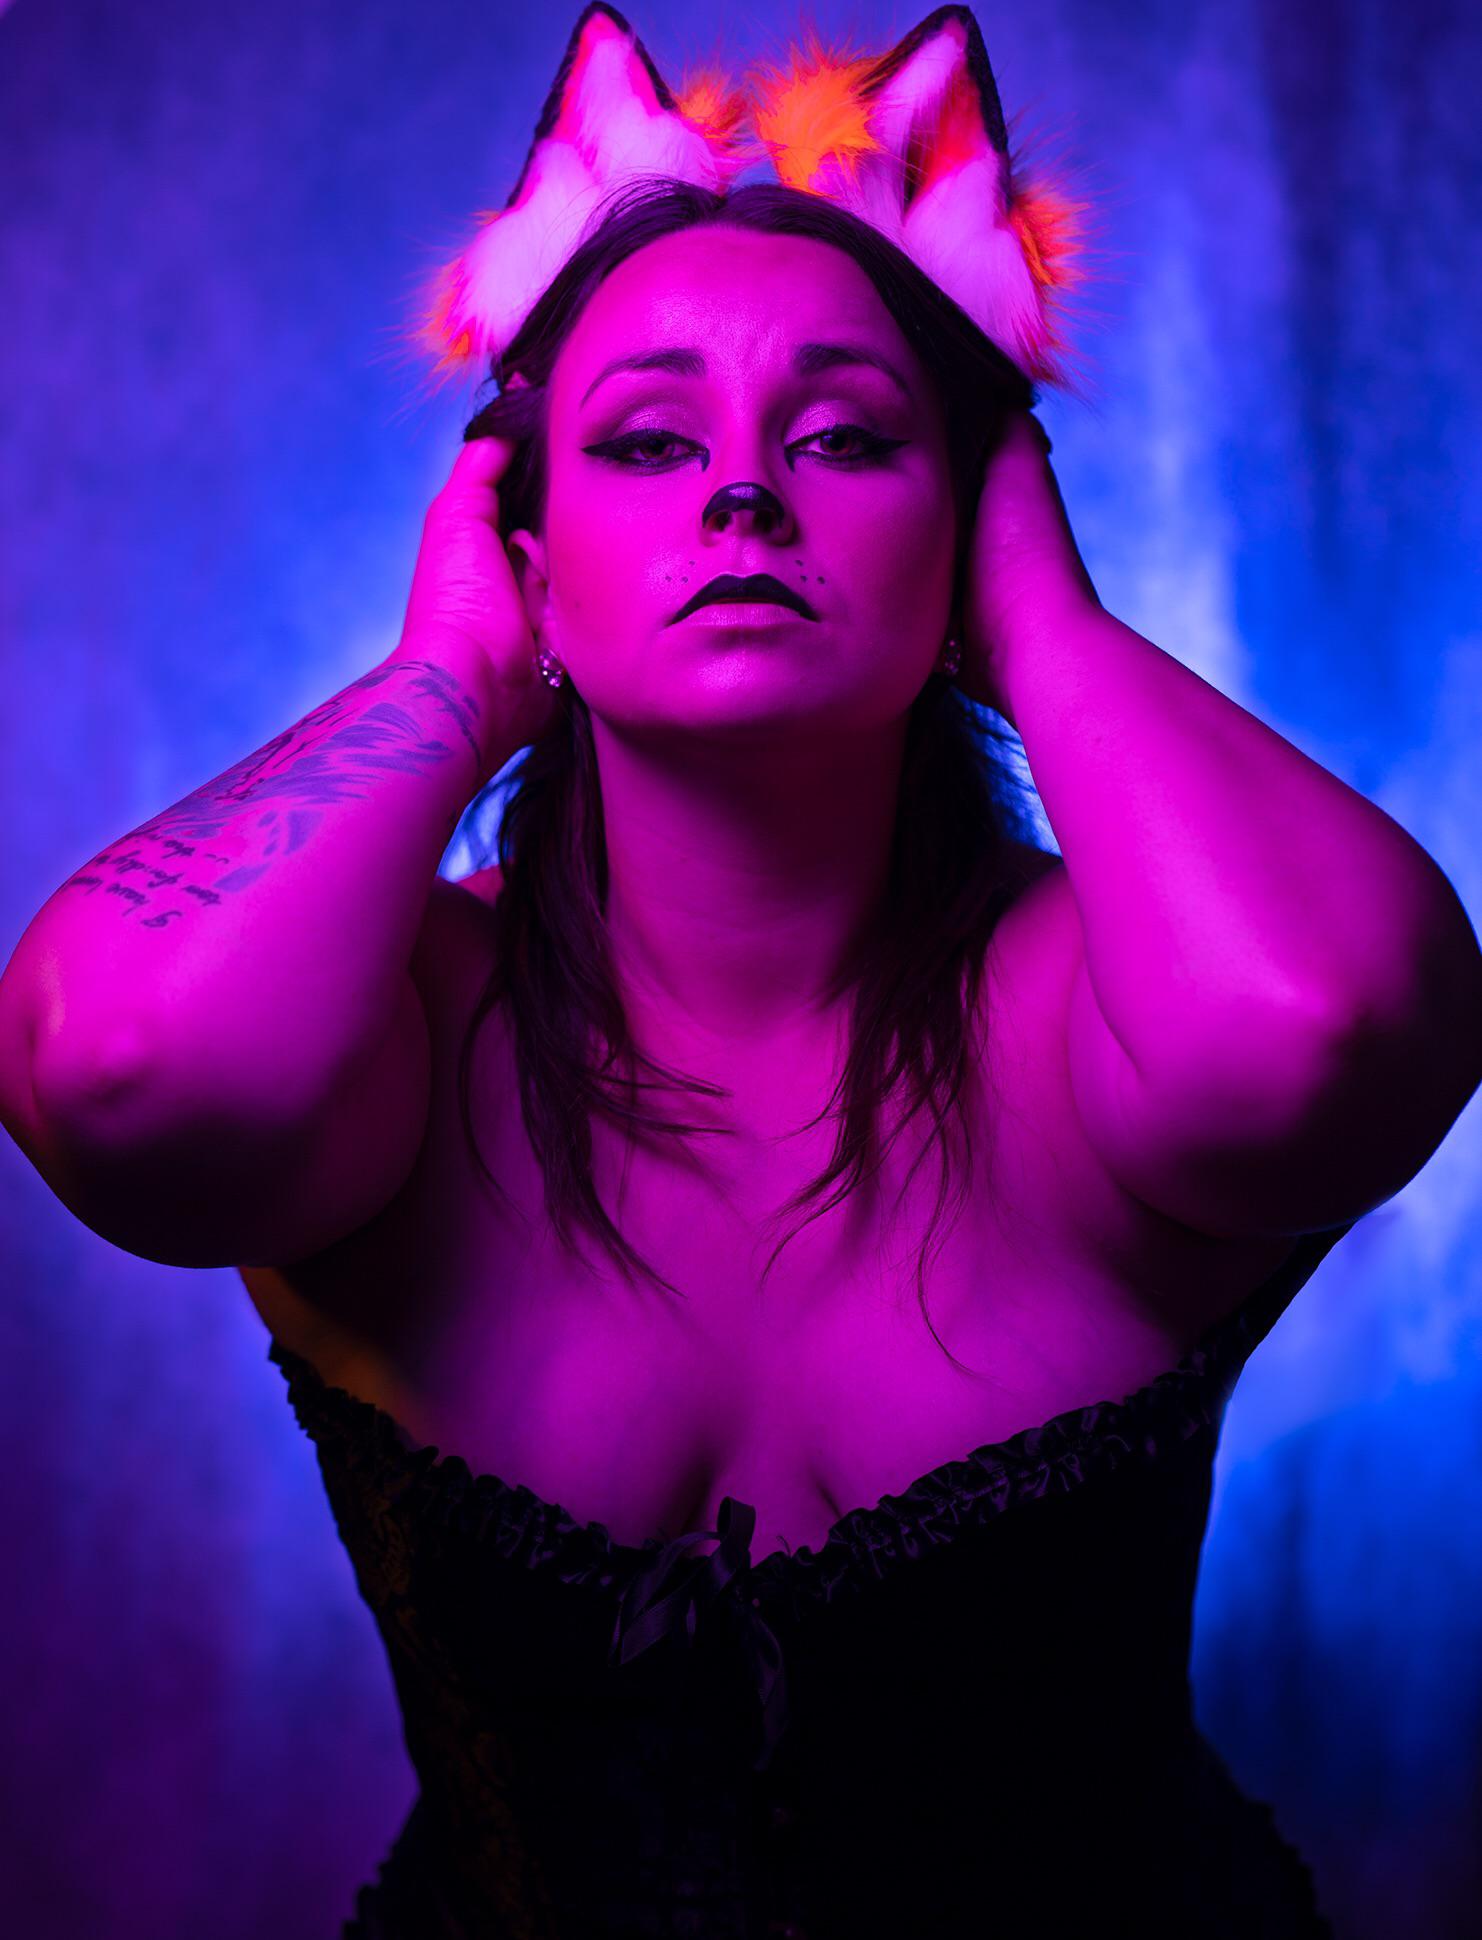 Feelin Foxy 🔥 Model Kaitlyn Oc Photographer Scrolller 8770